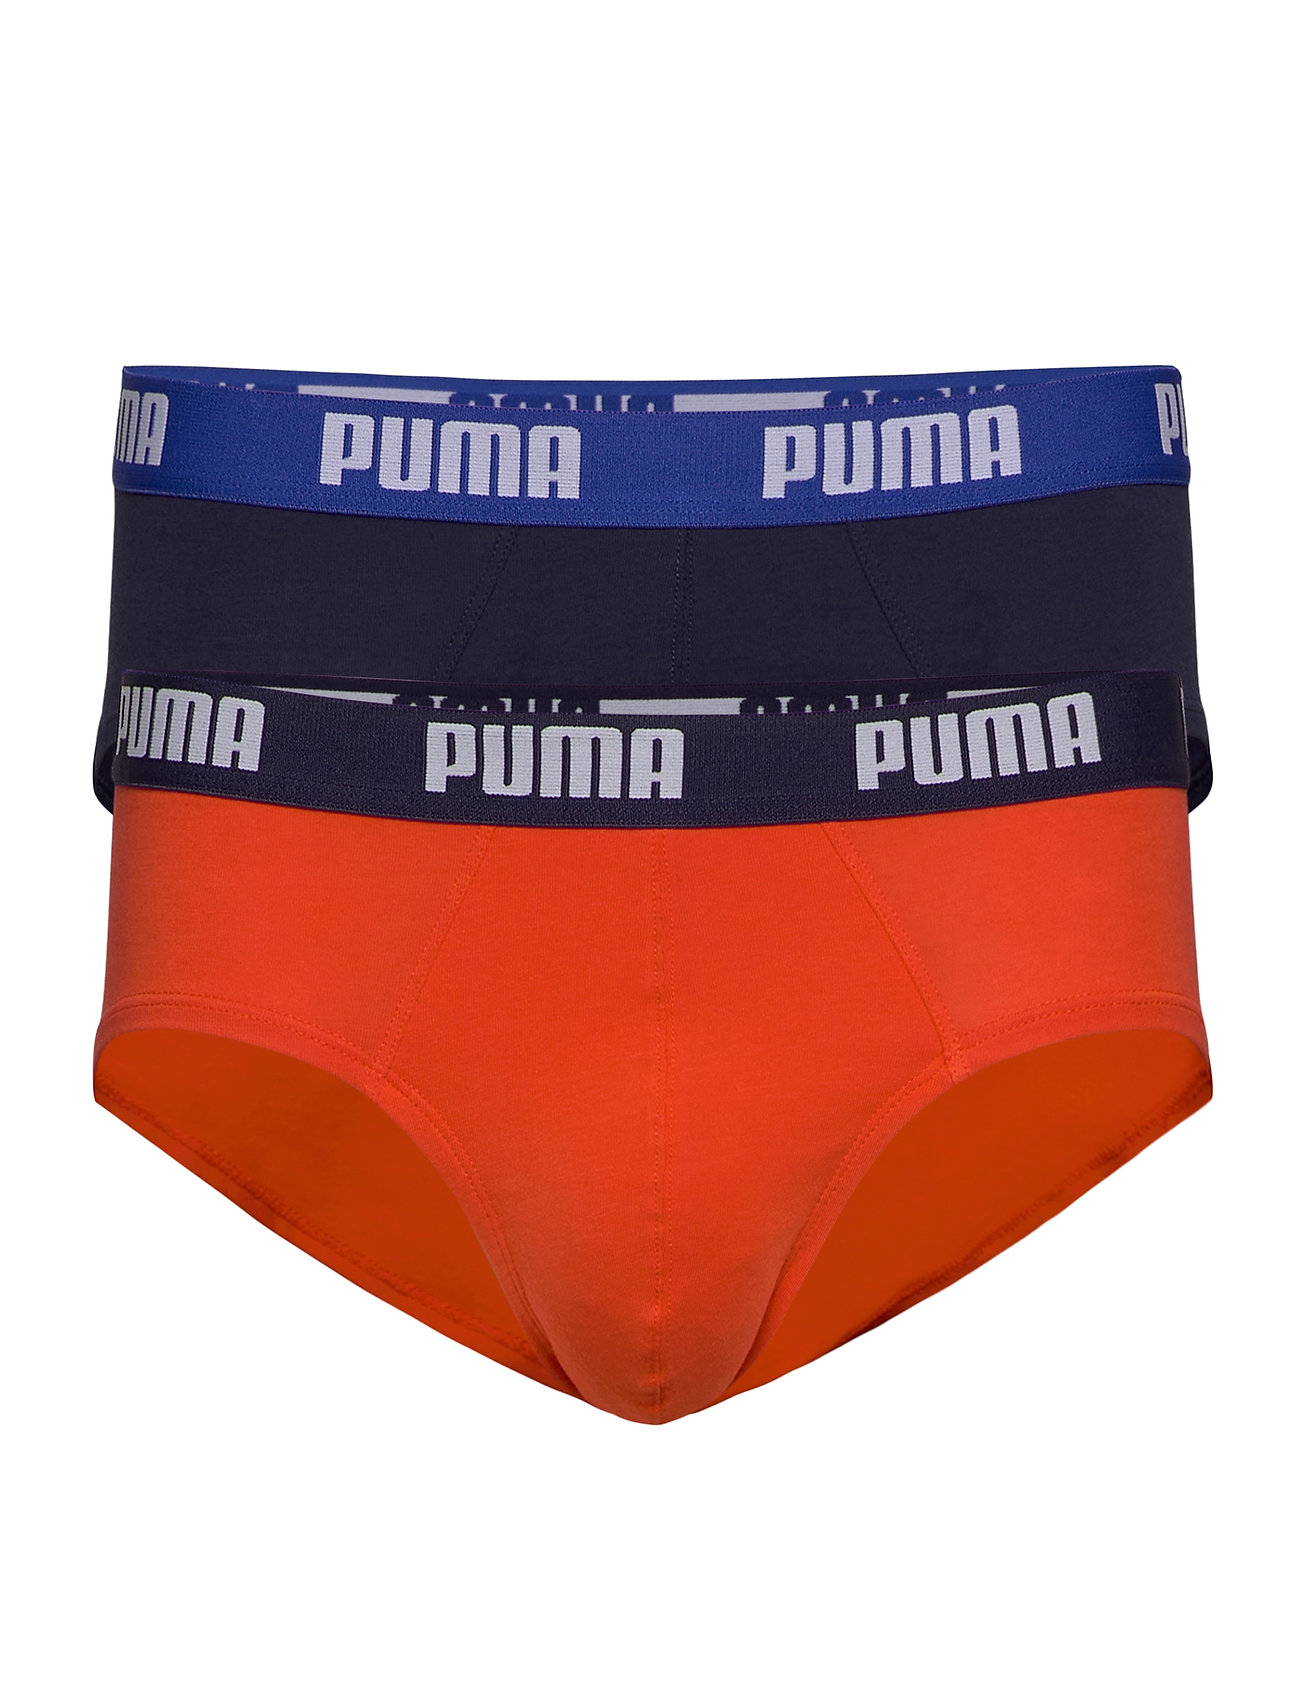 PUMA Puma Basic Brief 2p (Blue / Red 